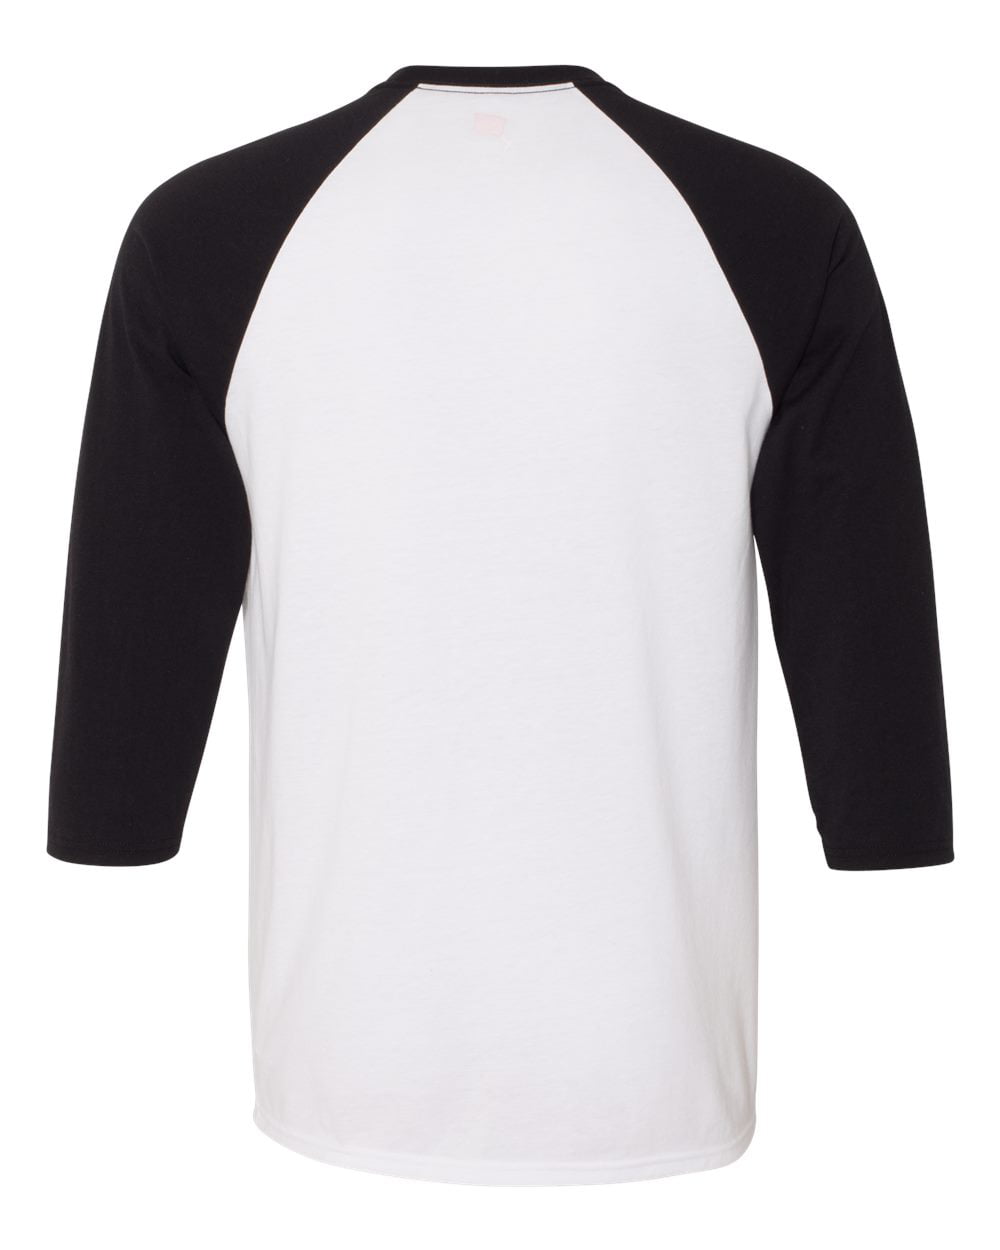 raglan shirt black and white